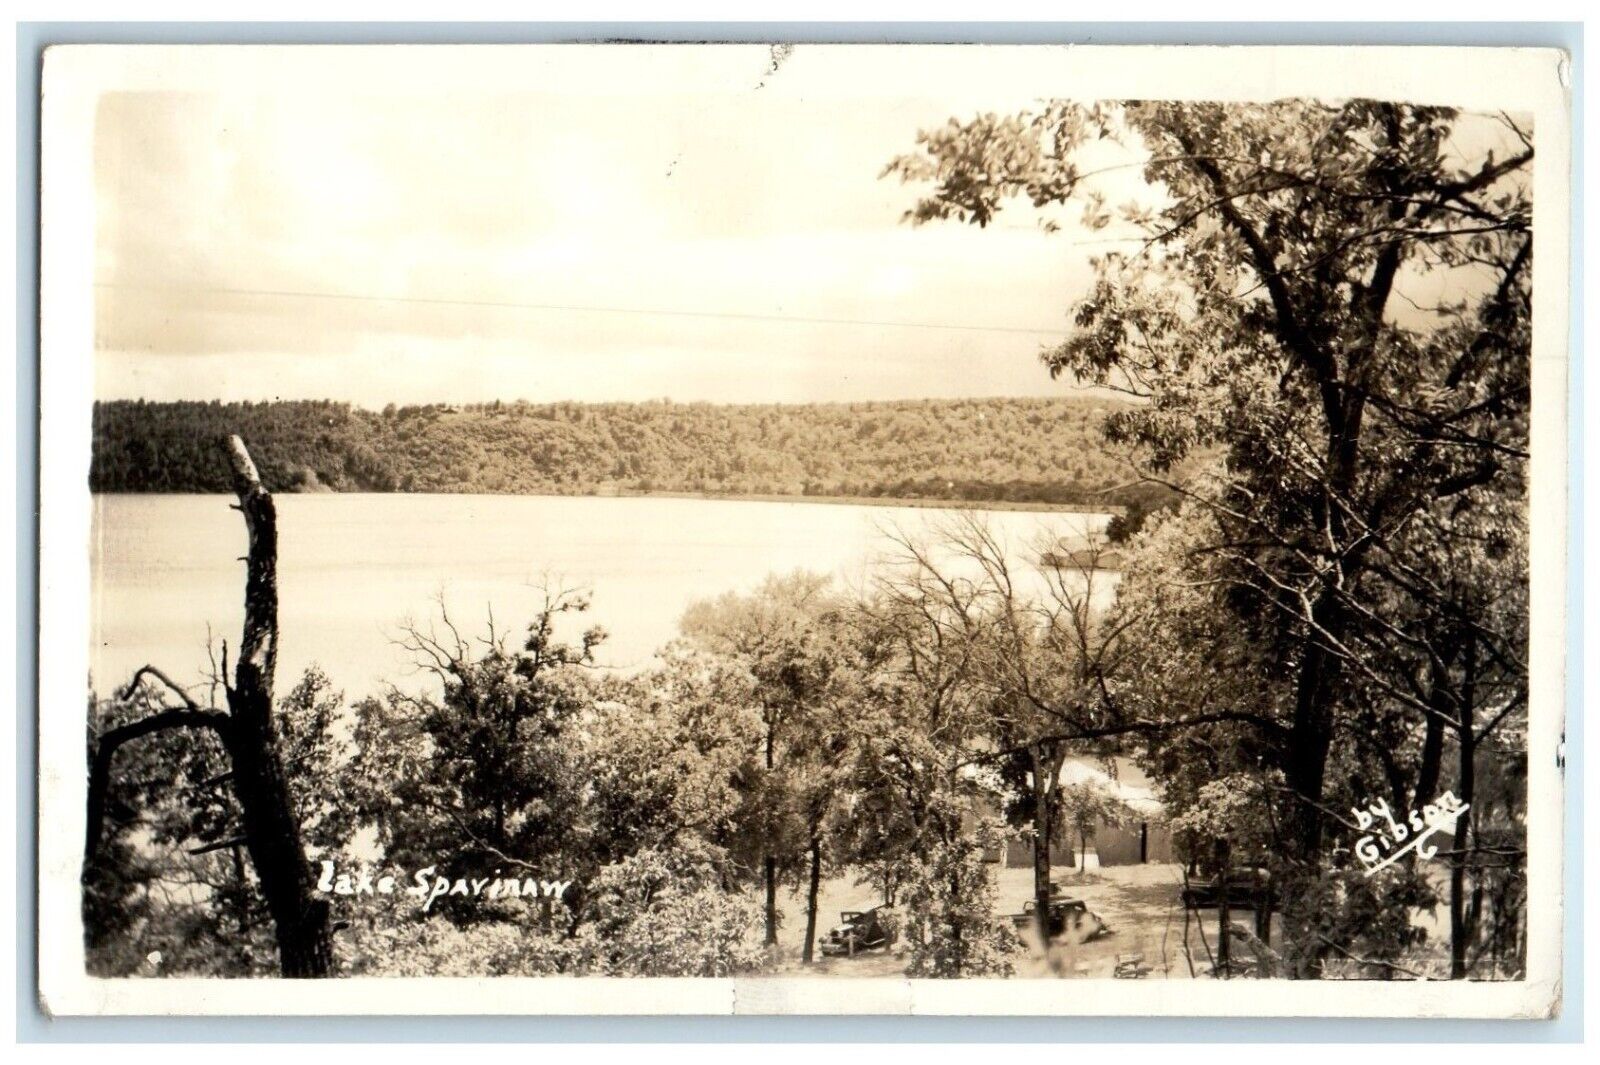 1942 View Of Lake Sparinaw Pryor Oklahoma OK RPPC Photo Posted Vintage Postcard